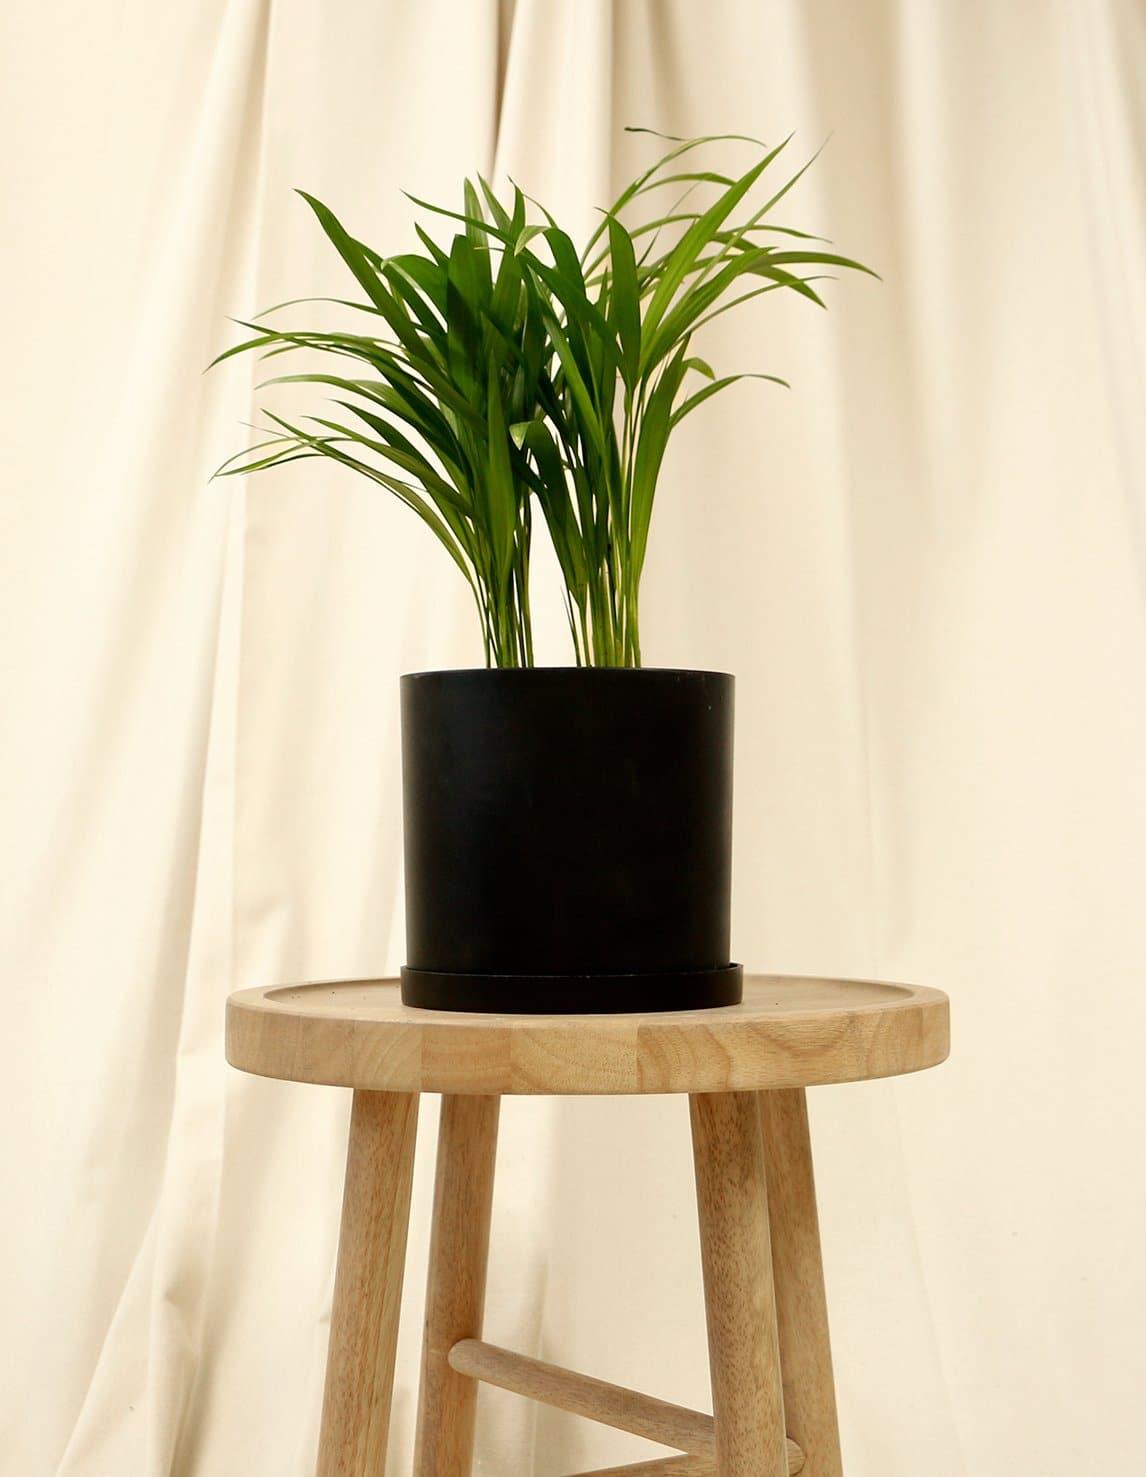 Medium Parlor Palm in black pot.